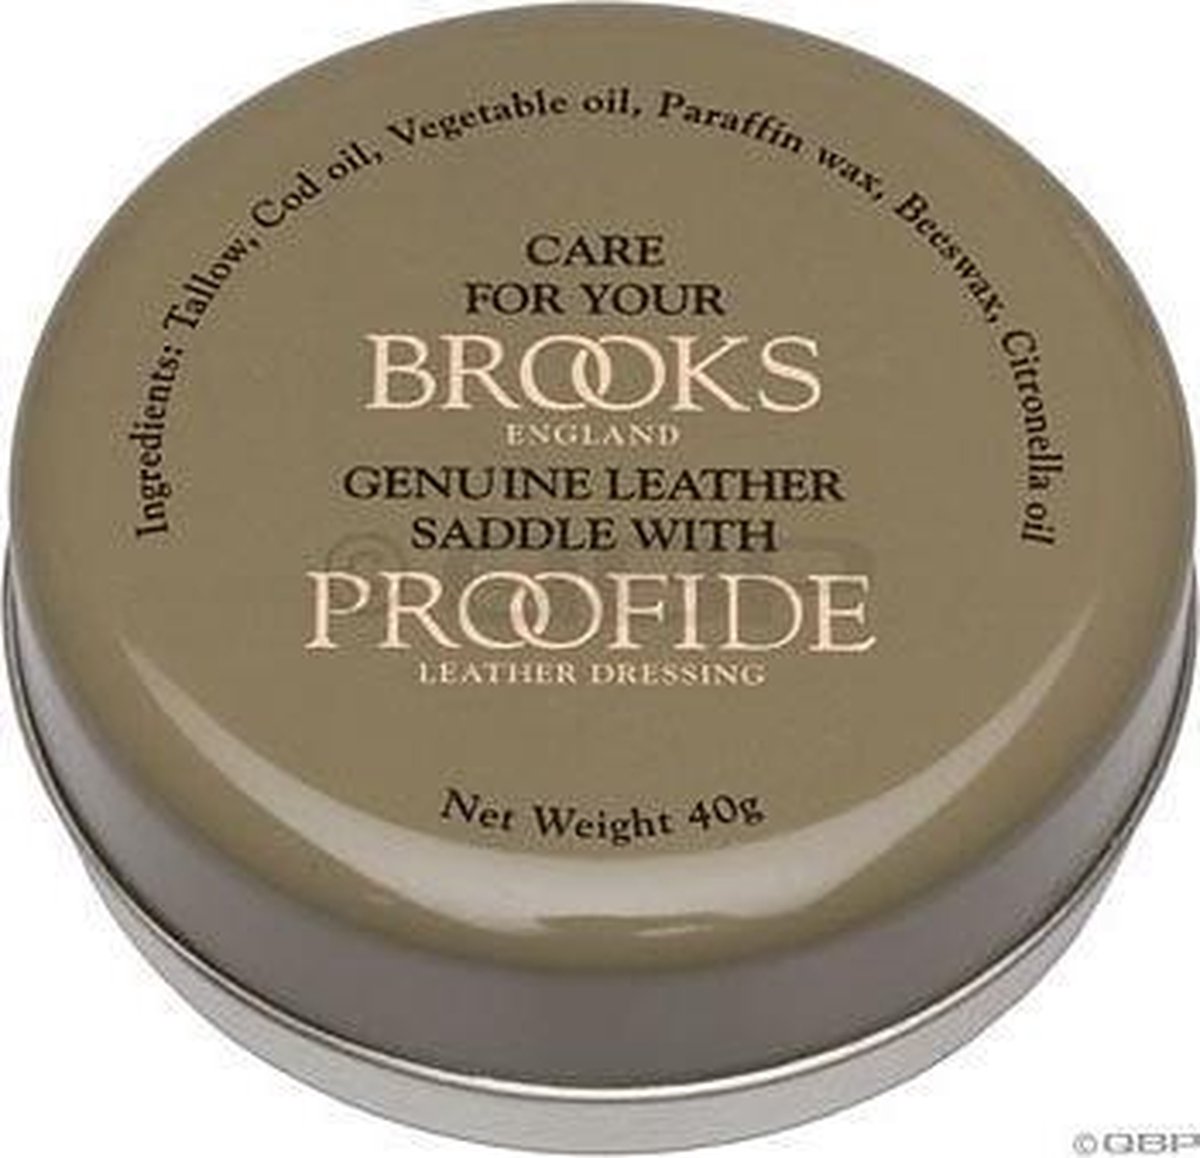 Brooks Proofide Leather Dressing - Zadelvet - 40 gram - Brooks